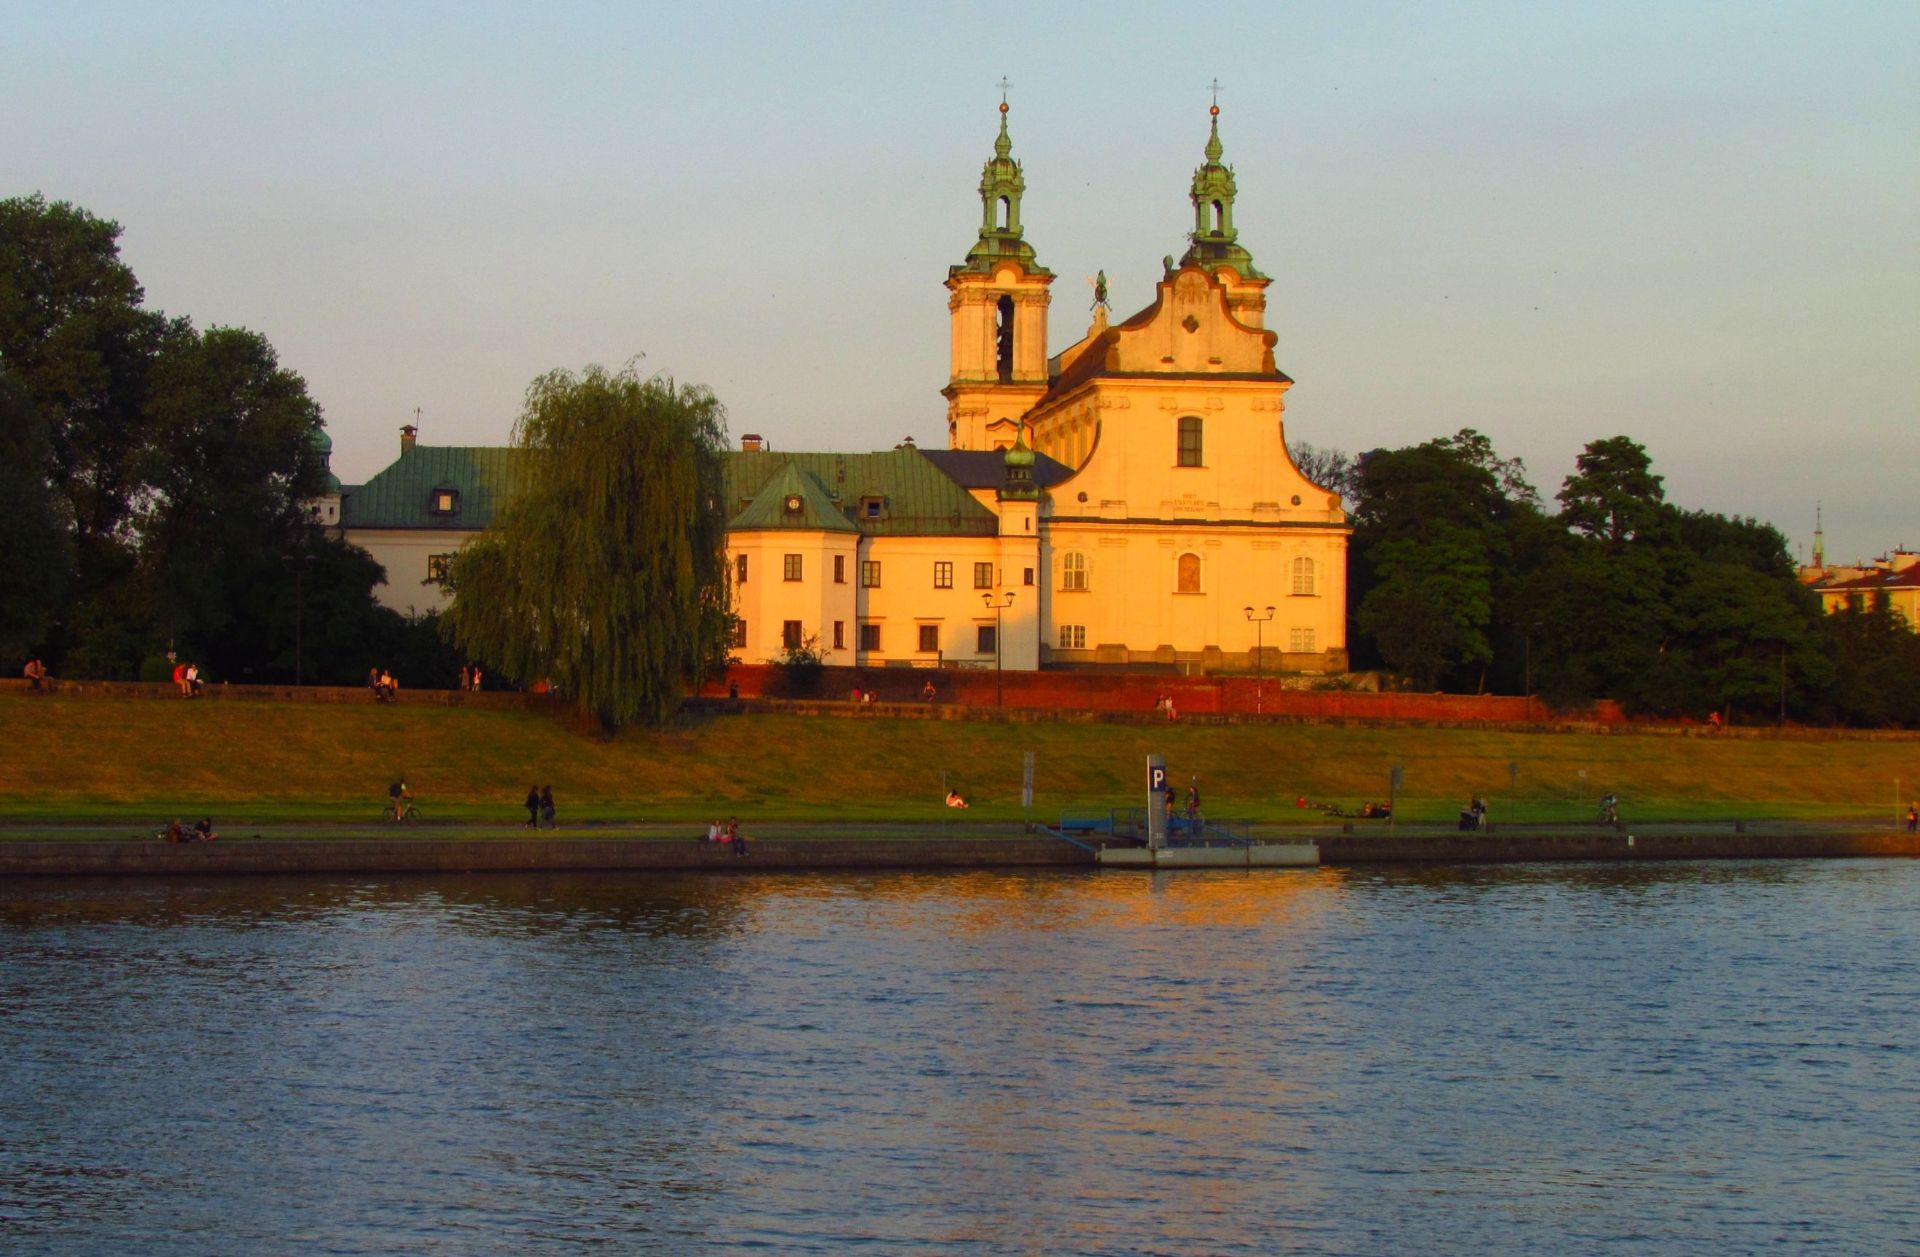 Skałka位于瓦维尔（Wawel）以南的维斯杜拉河（Vistula River）上，一直是岛上城市